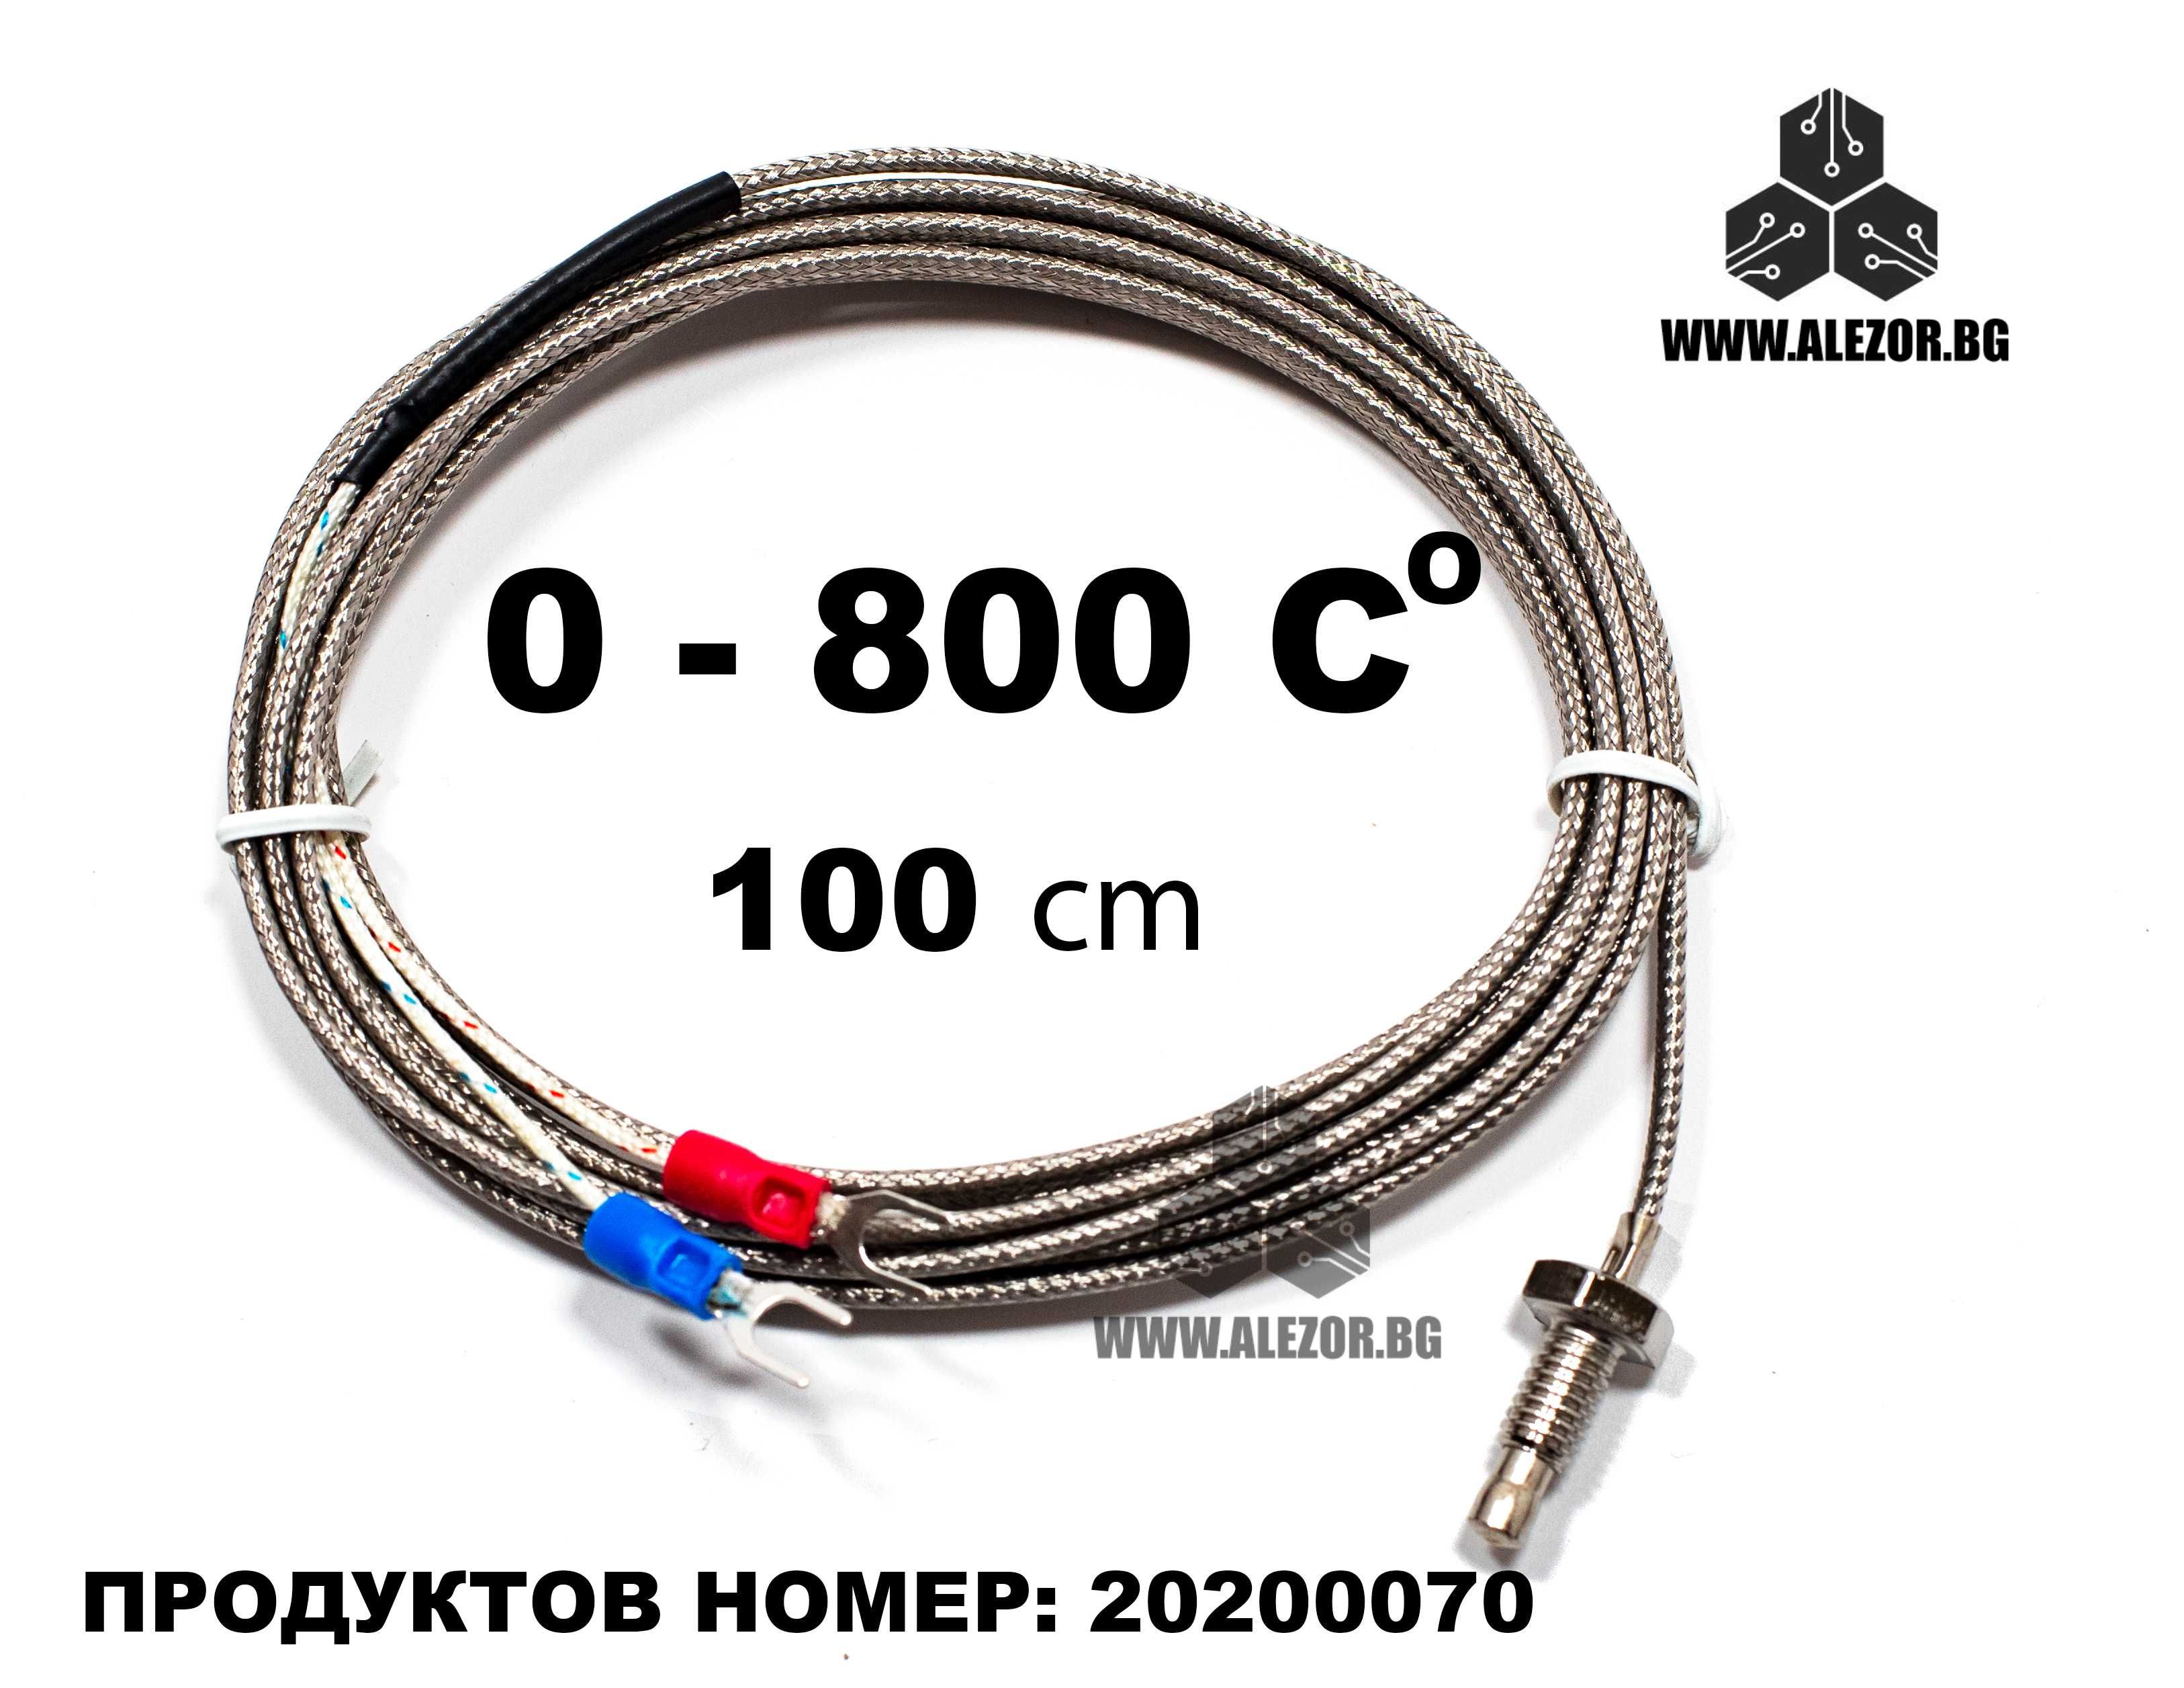 Температурен Сензор, Термодвойка тип К, 100 cm, Резба М6, 20200070